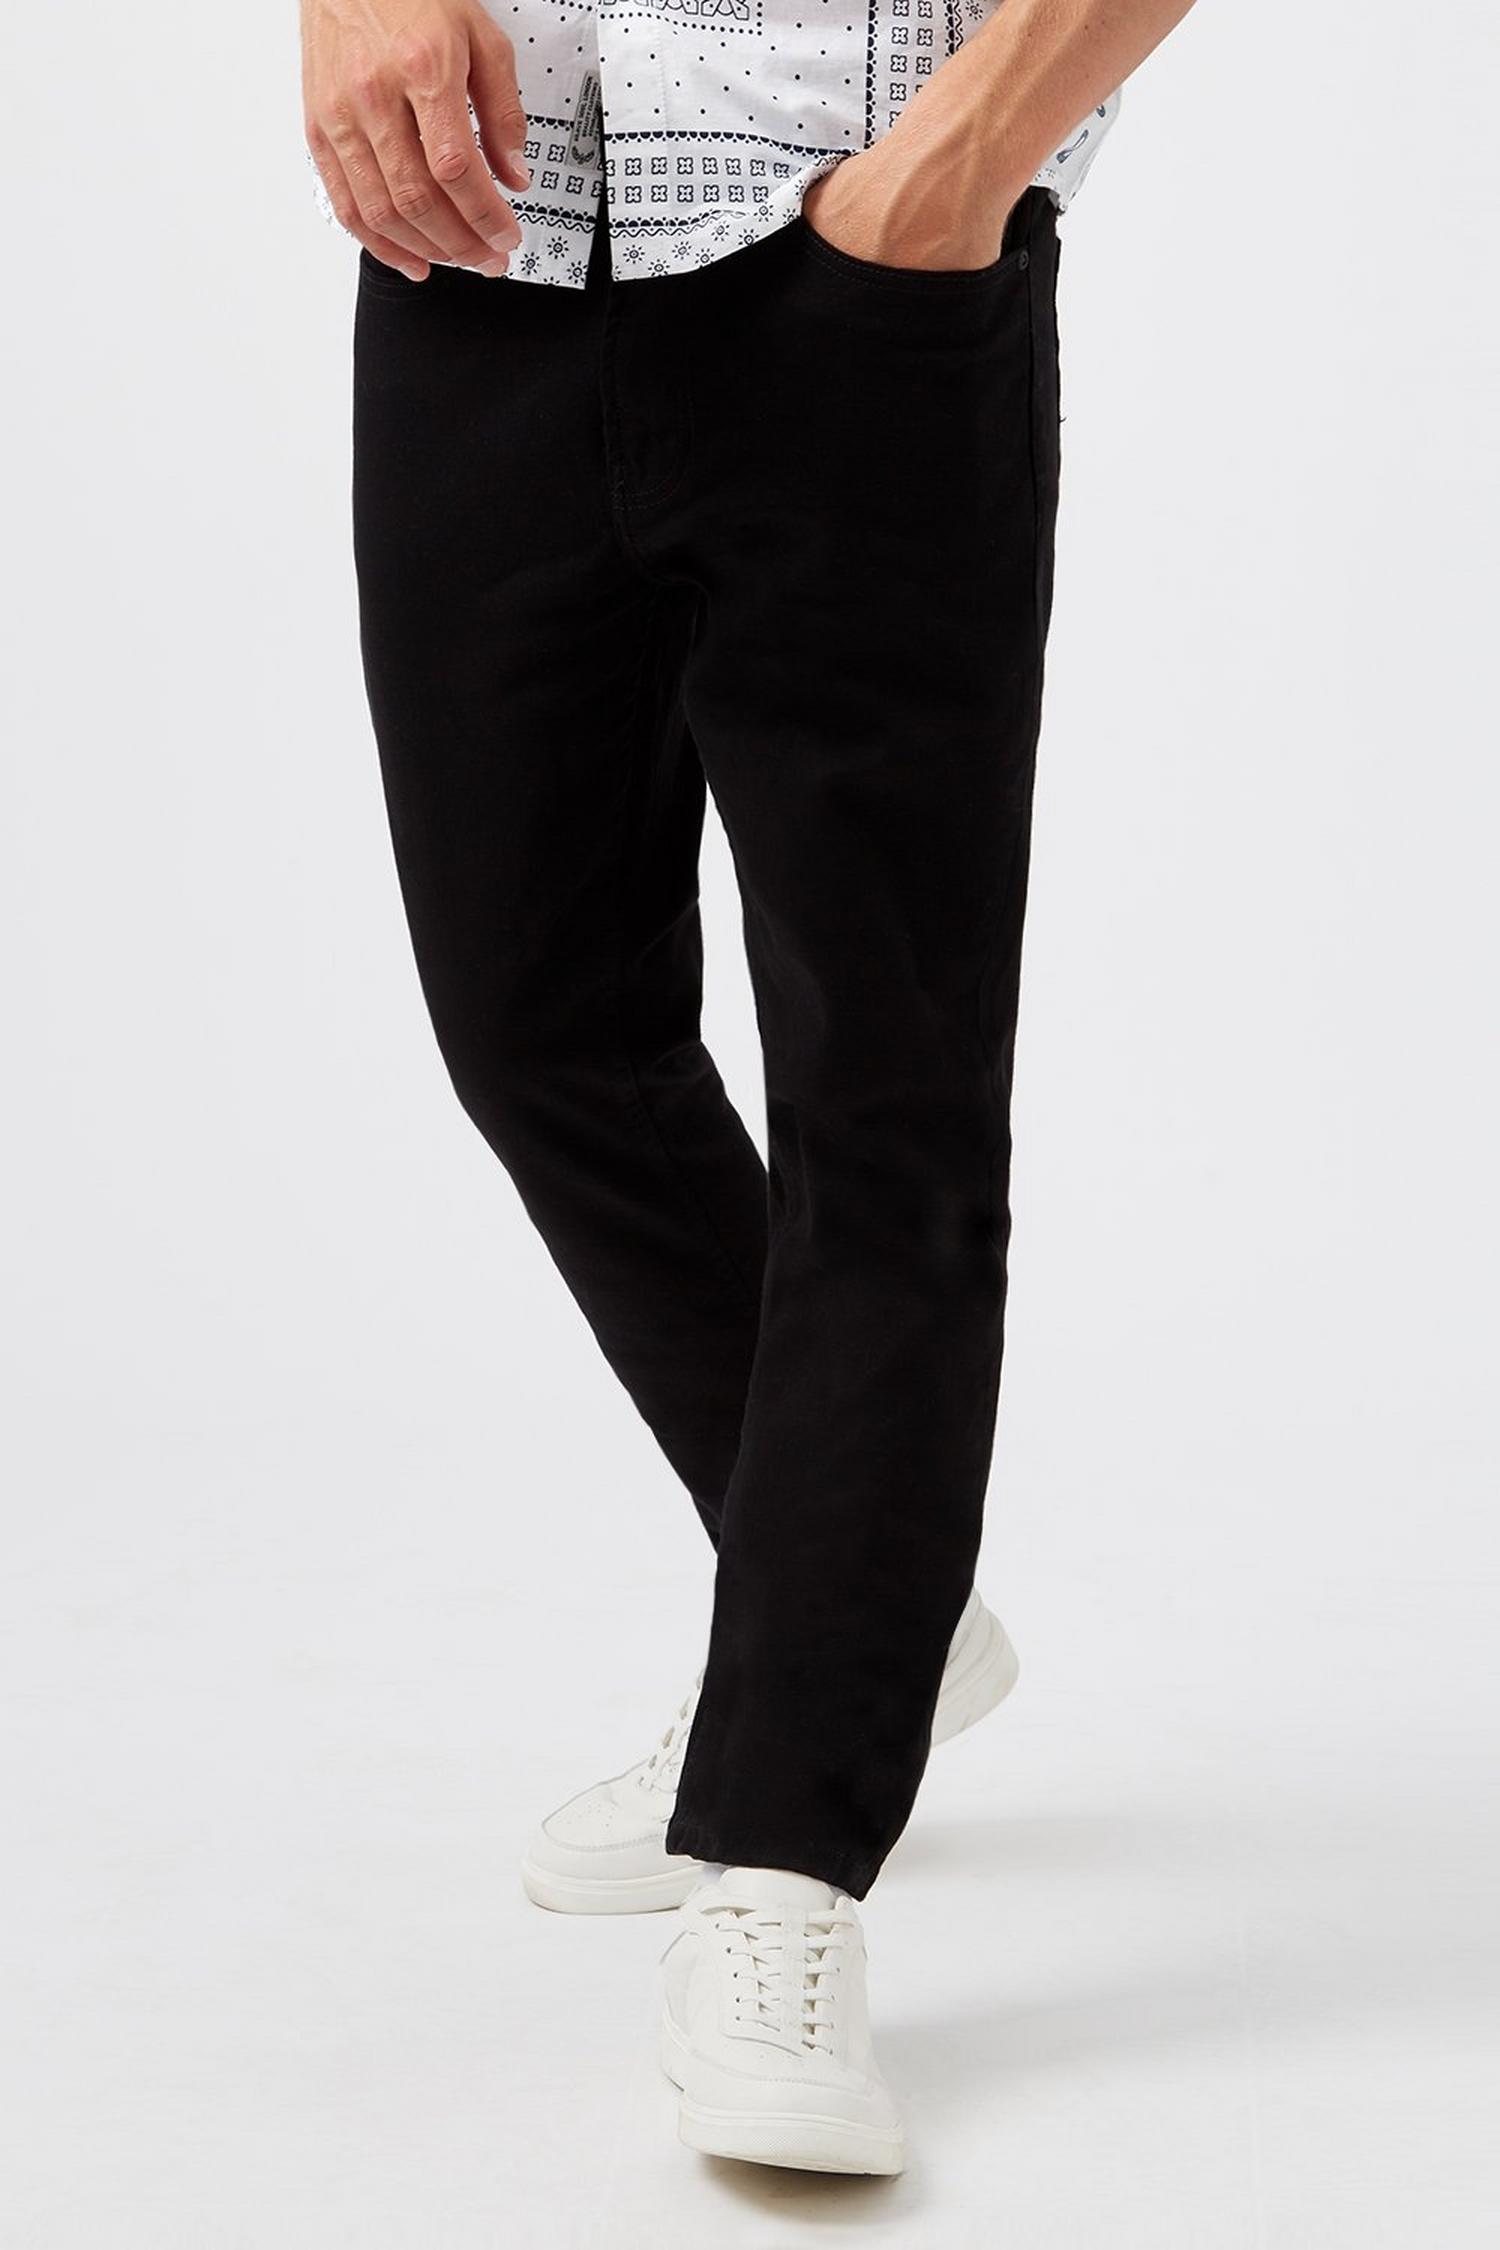 Black Stretch Skinny Jeans | Burton UK